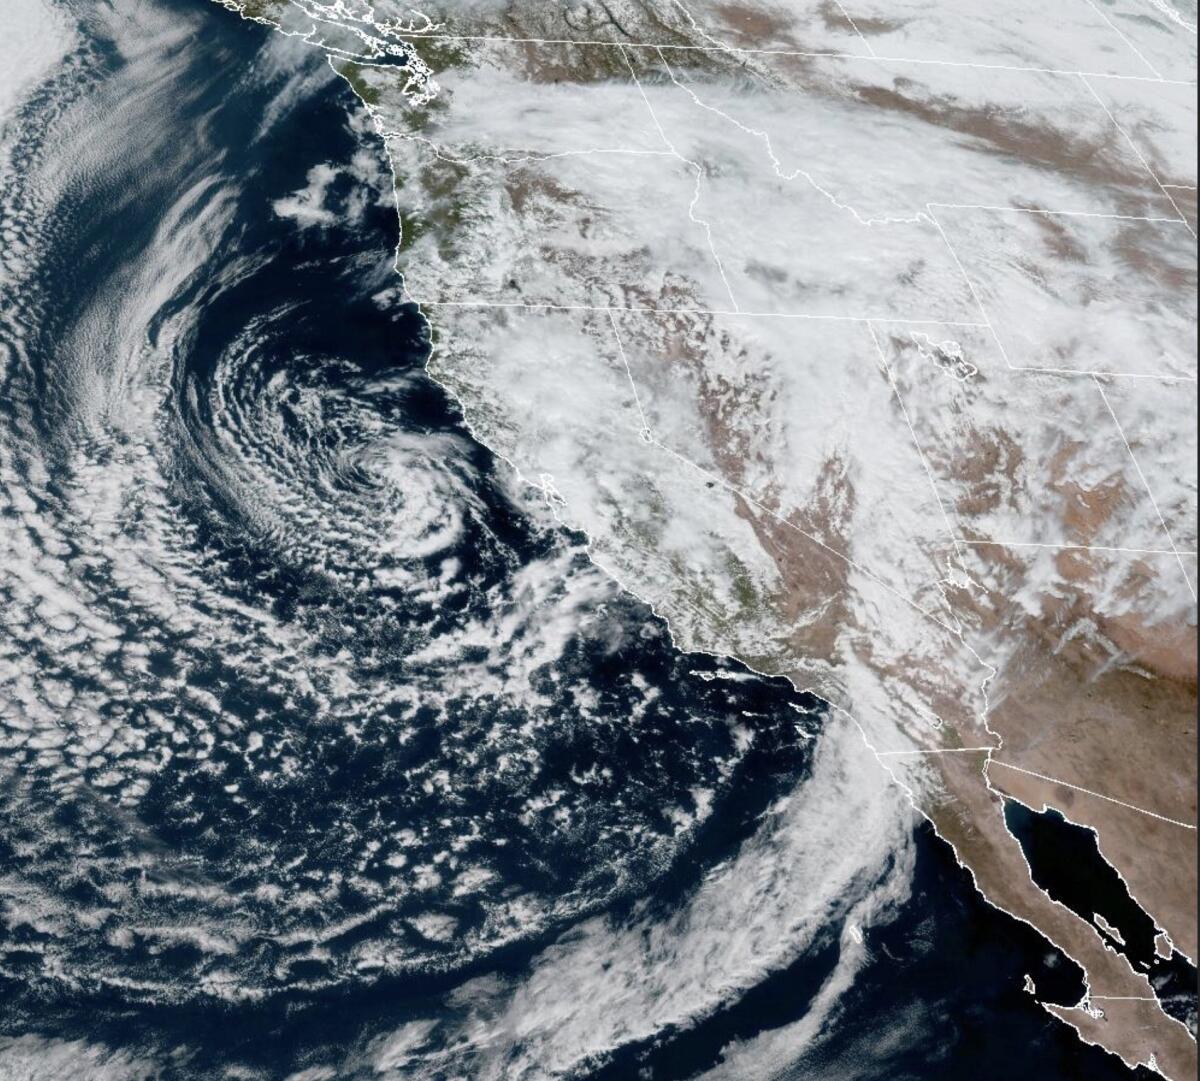 Bomb cyclone' begins forming off California coast: photos